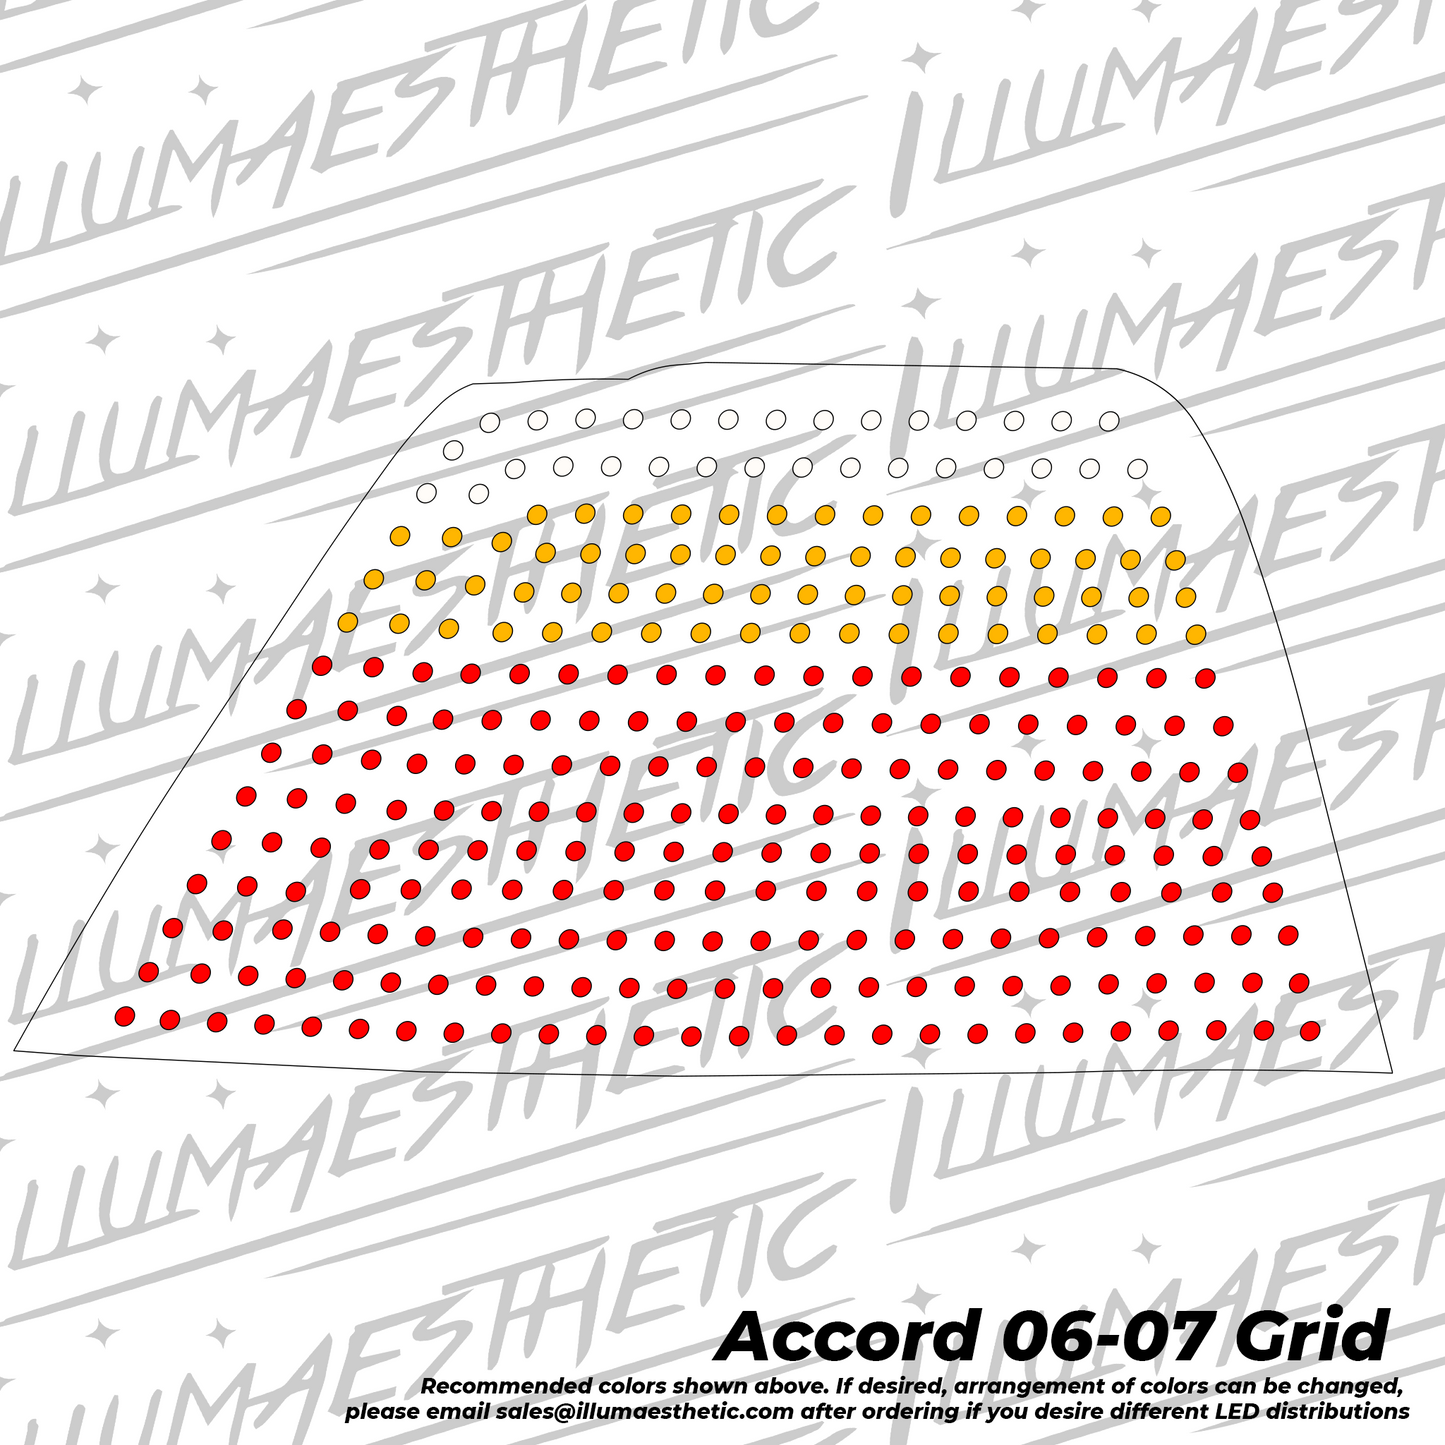 Honda Accord (06-07) - Complete DIY Kit